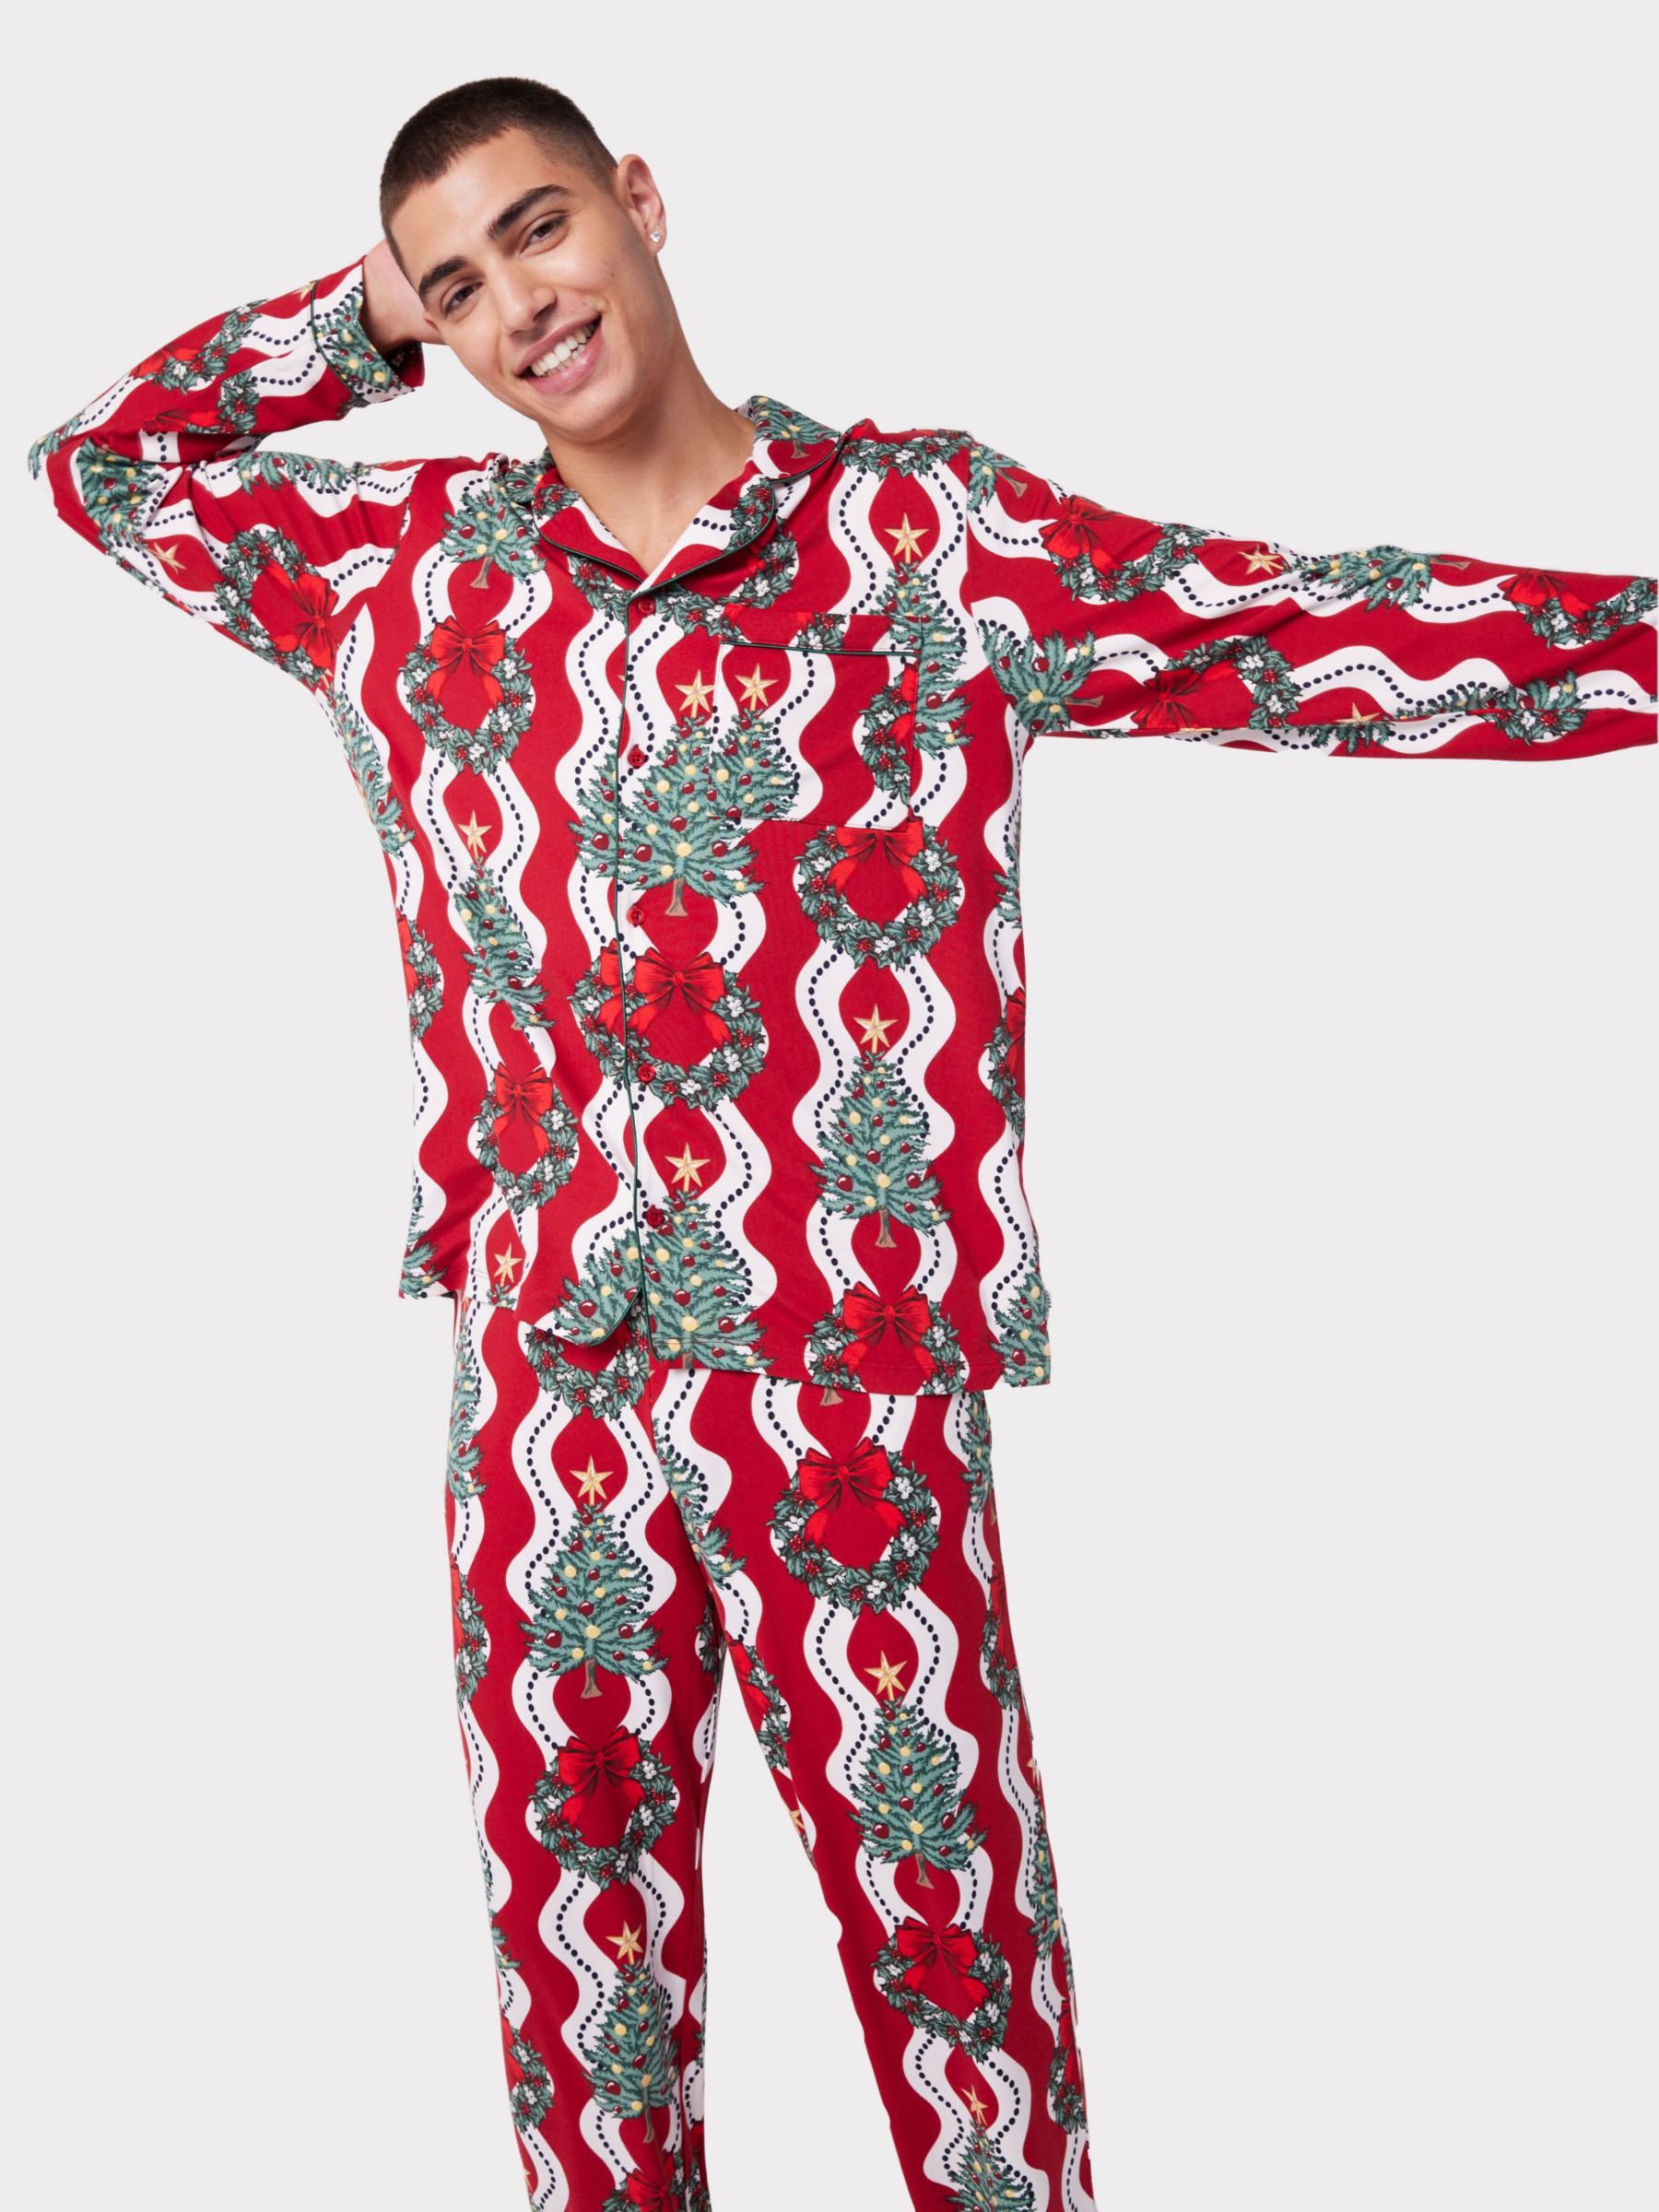 Chelsea Peers Wreath Print Pyjama Set, Red/Multi at John Lewis & Partners